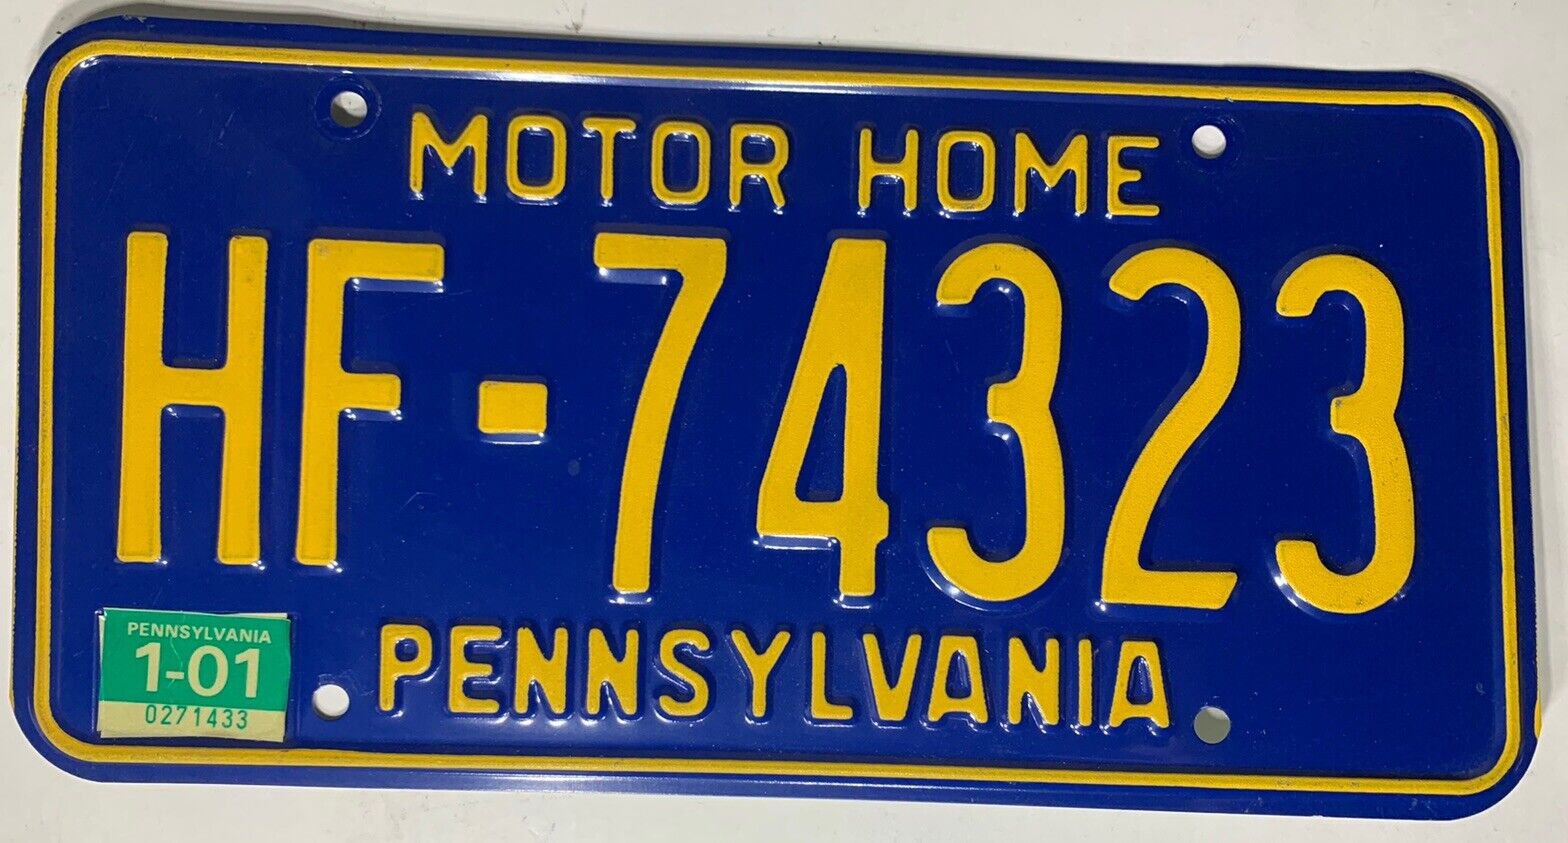 Vtg Pennsylvania License Plate - Motor Home - HF74323 - Mint Condition